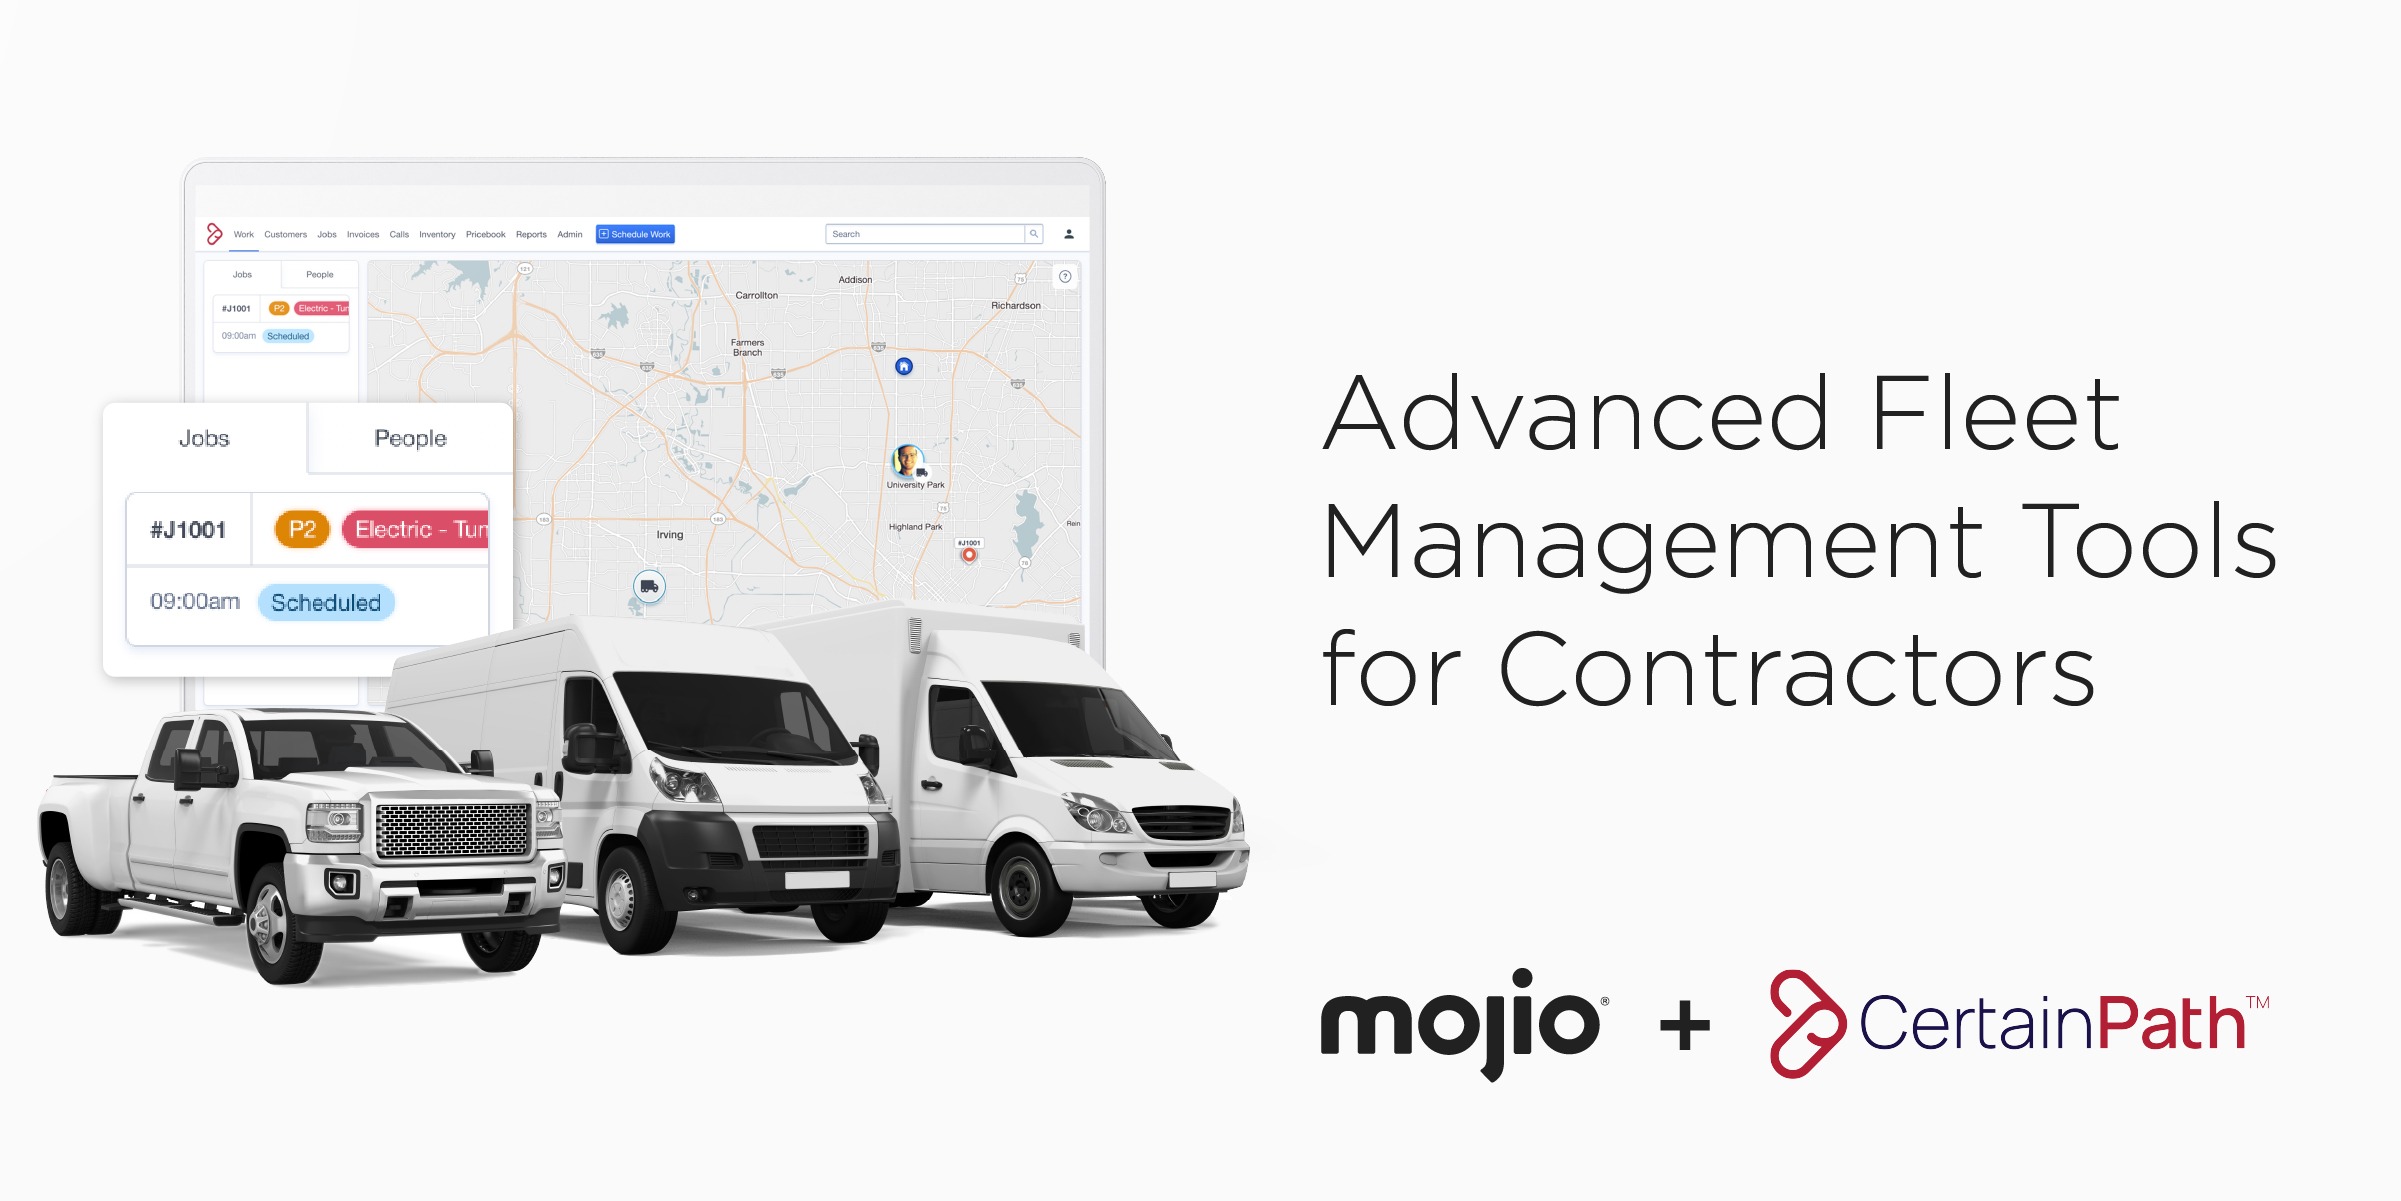 Advanced fleet management tools for contractors. Mojio + CertainPath